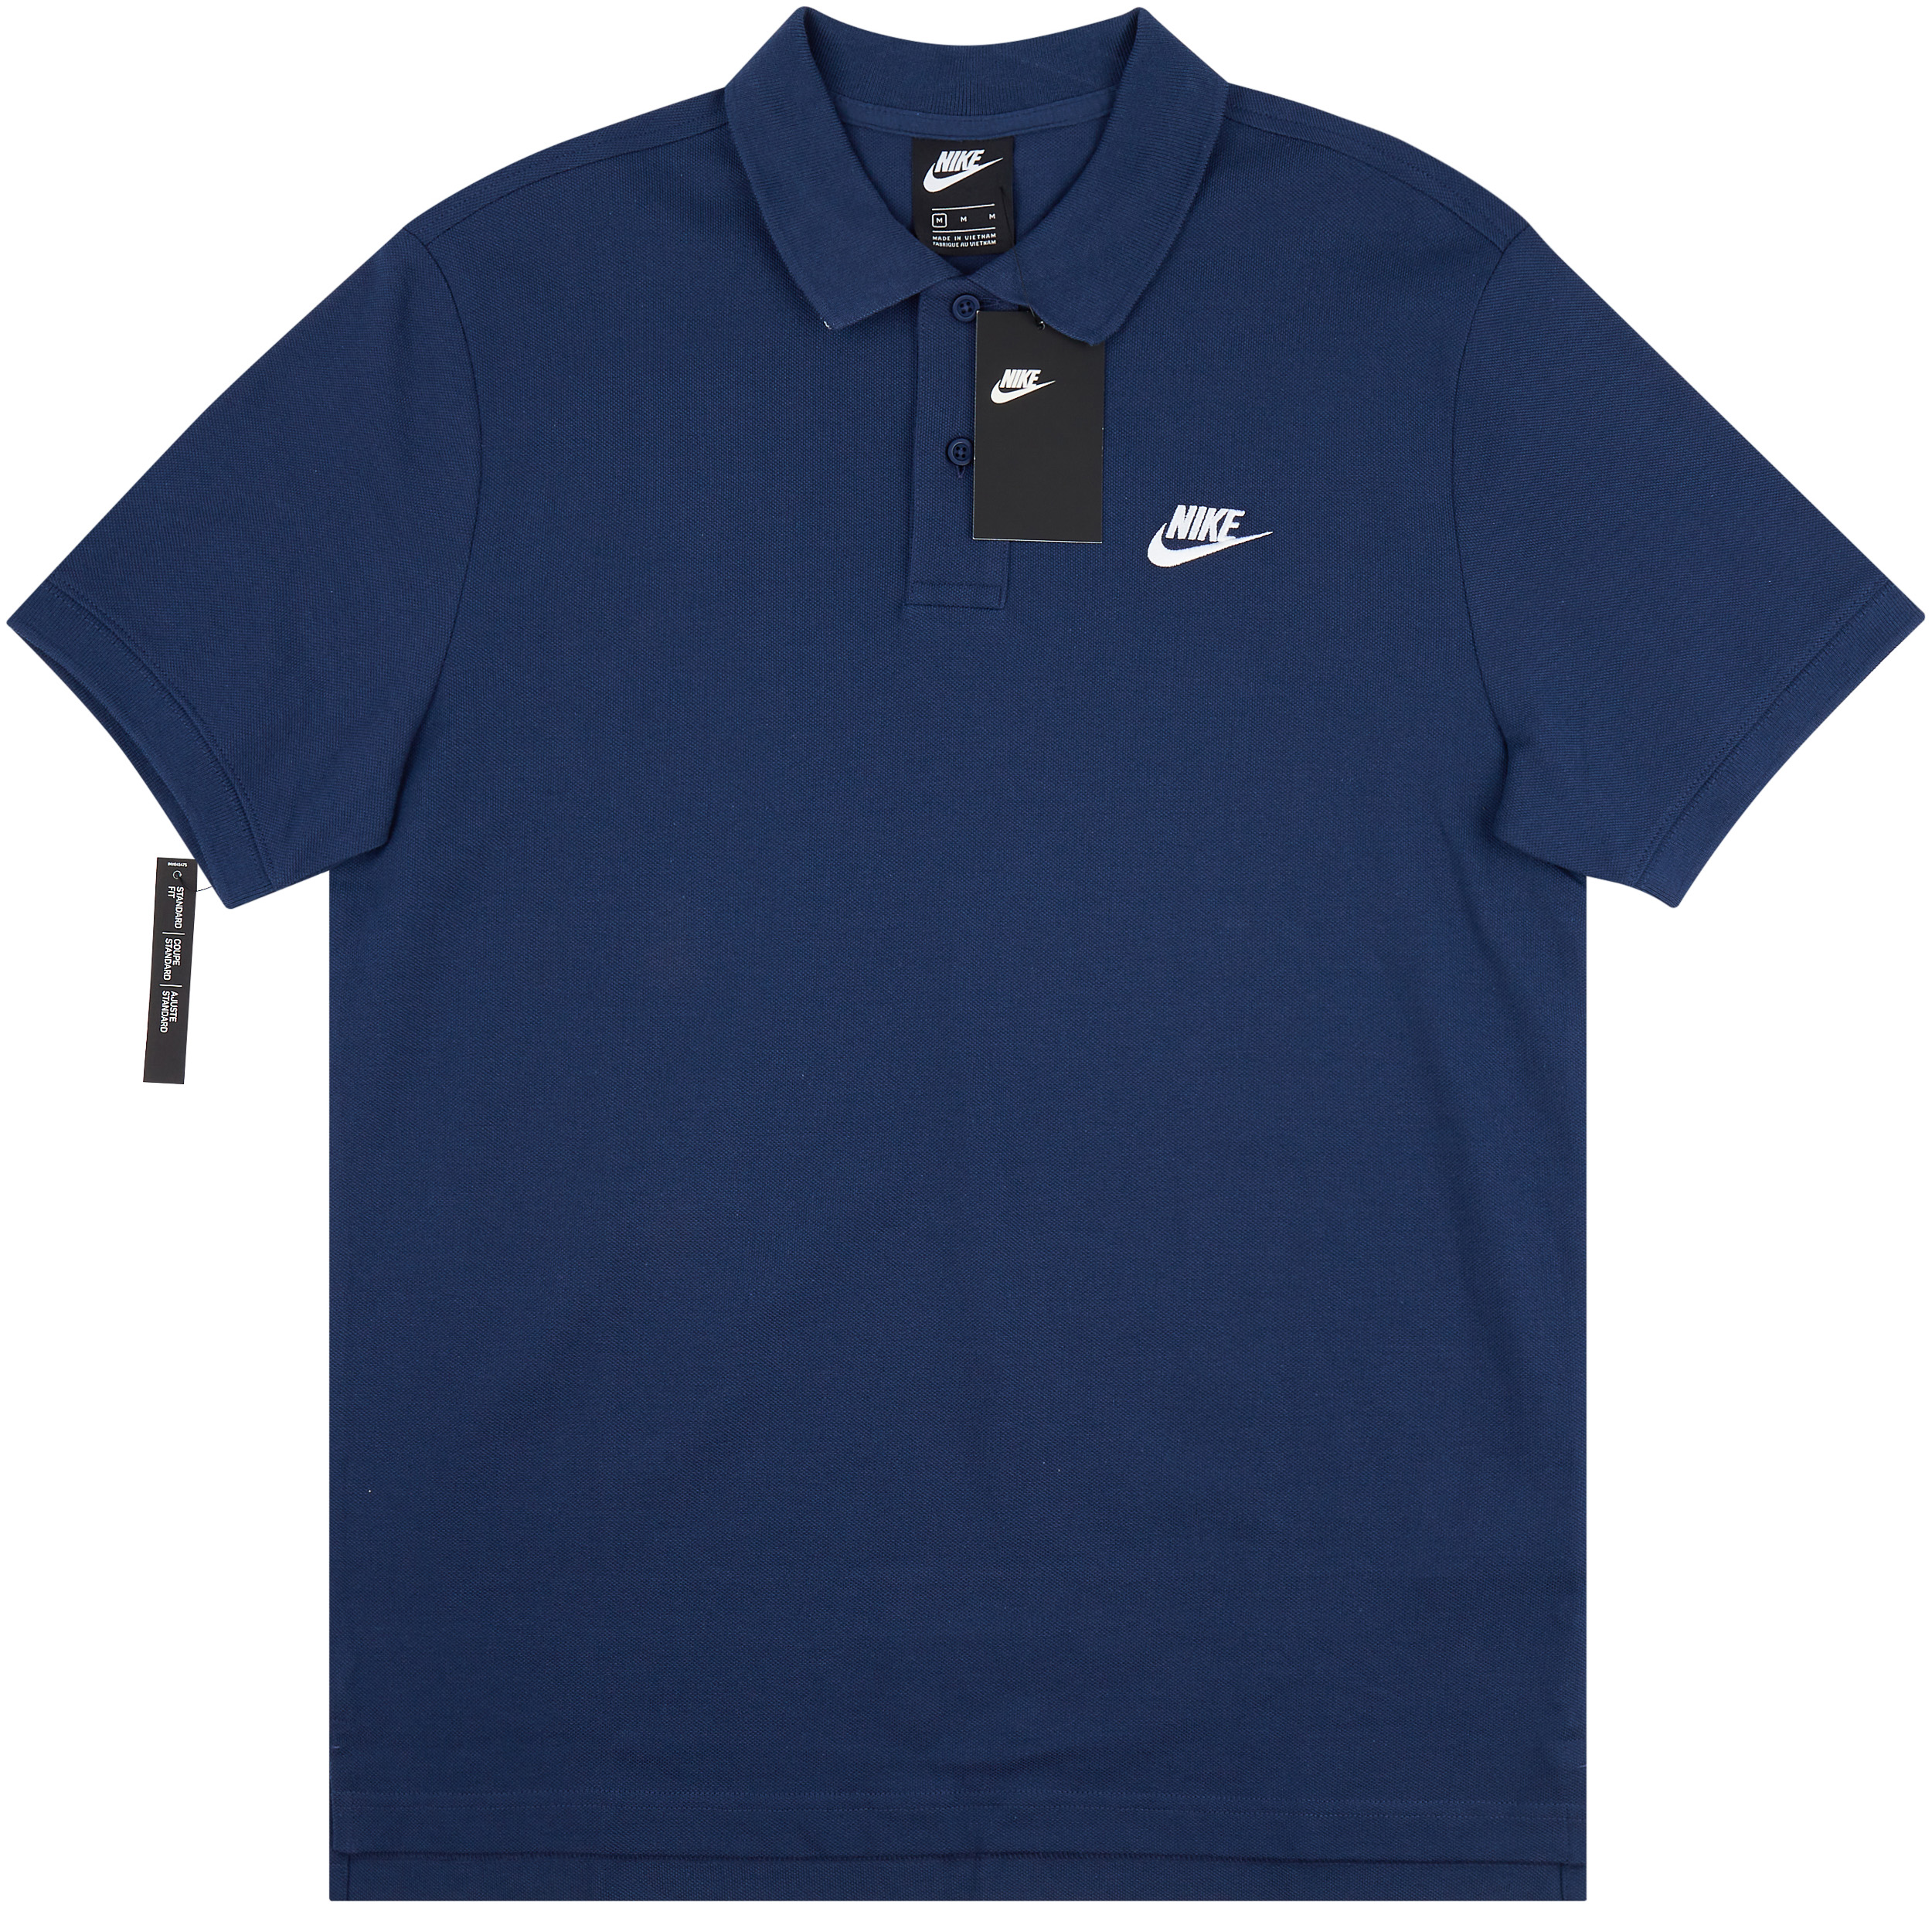 2019-20 Nike Polo T-Shirt - NEW - (S)